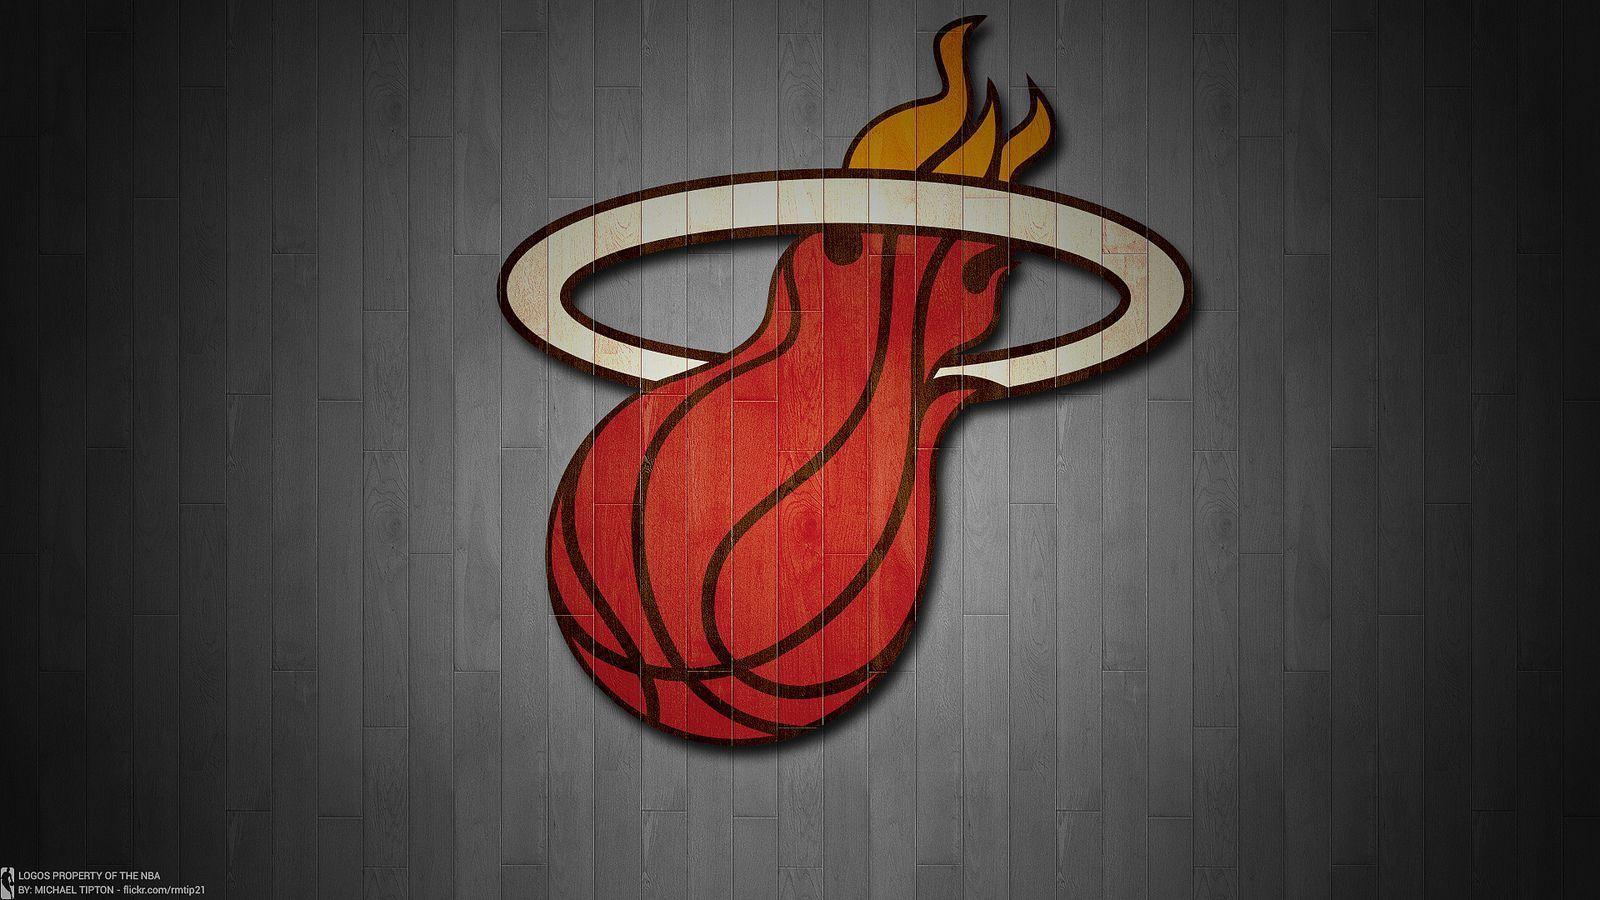 Miami Heat Rumors: Josh McRoberts Won&;t Be Traded